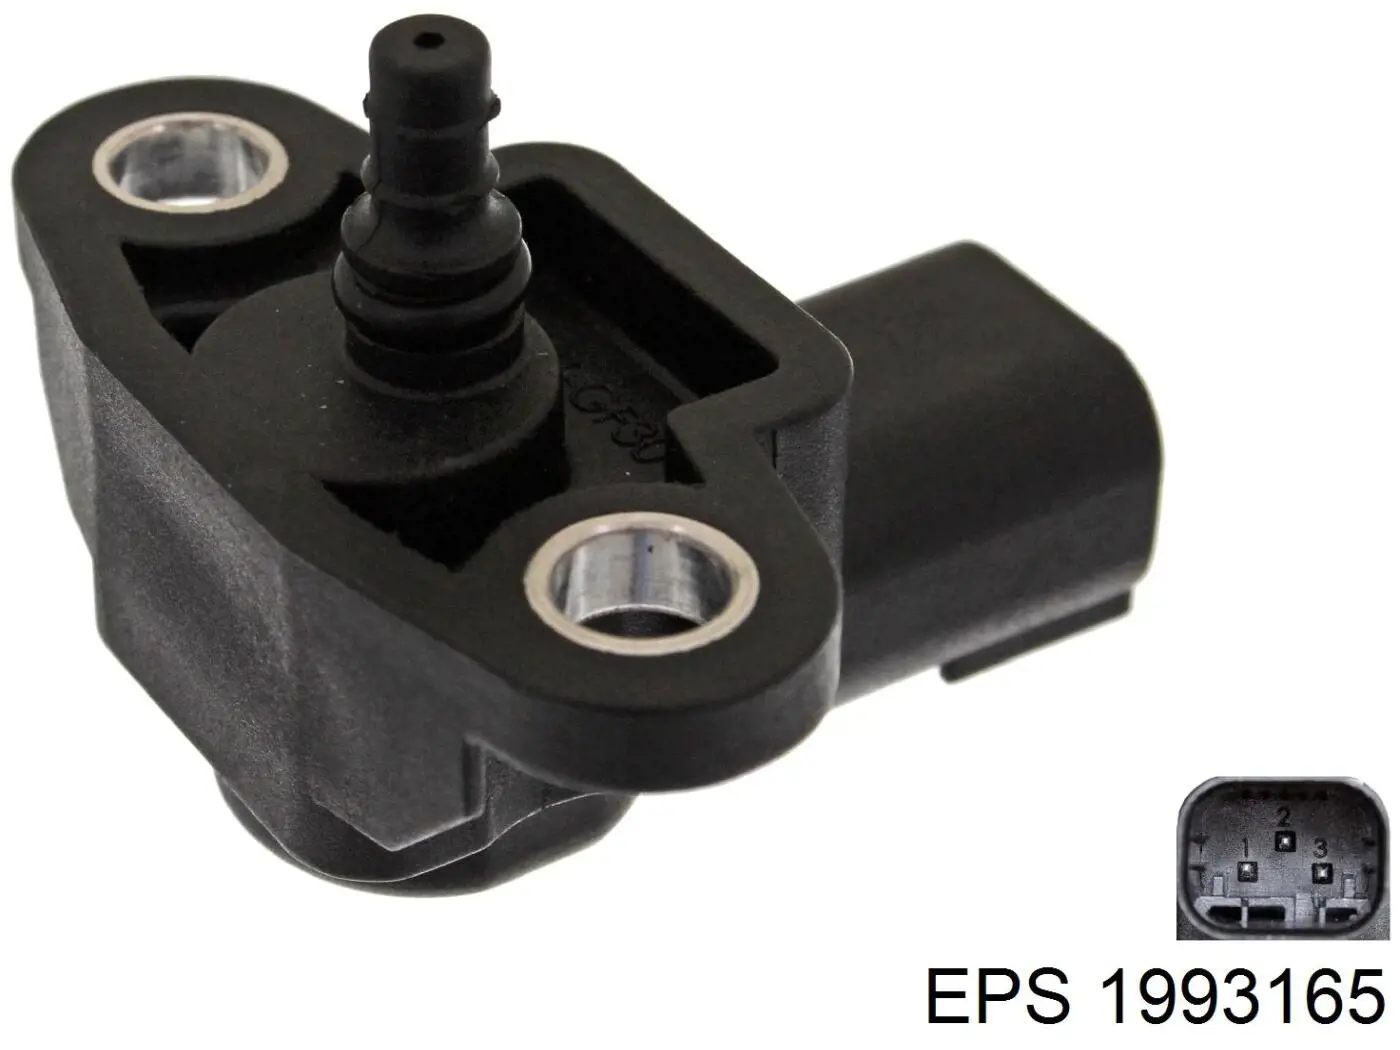 1993165 EPS sensor de presion de carga (inyeccion de aire turbina)